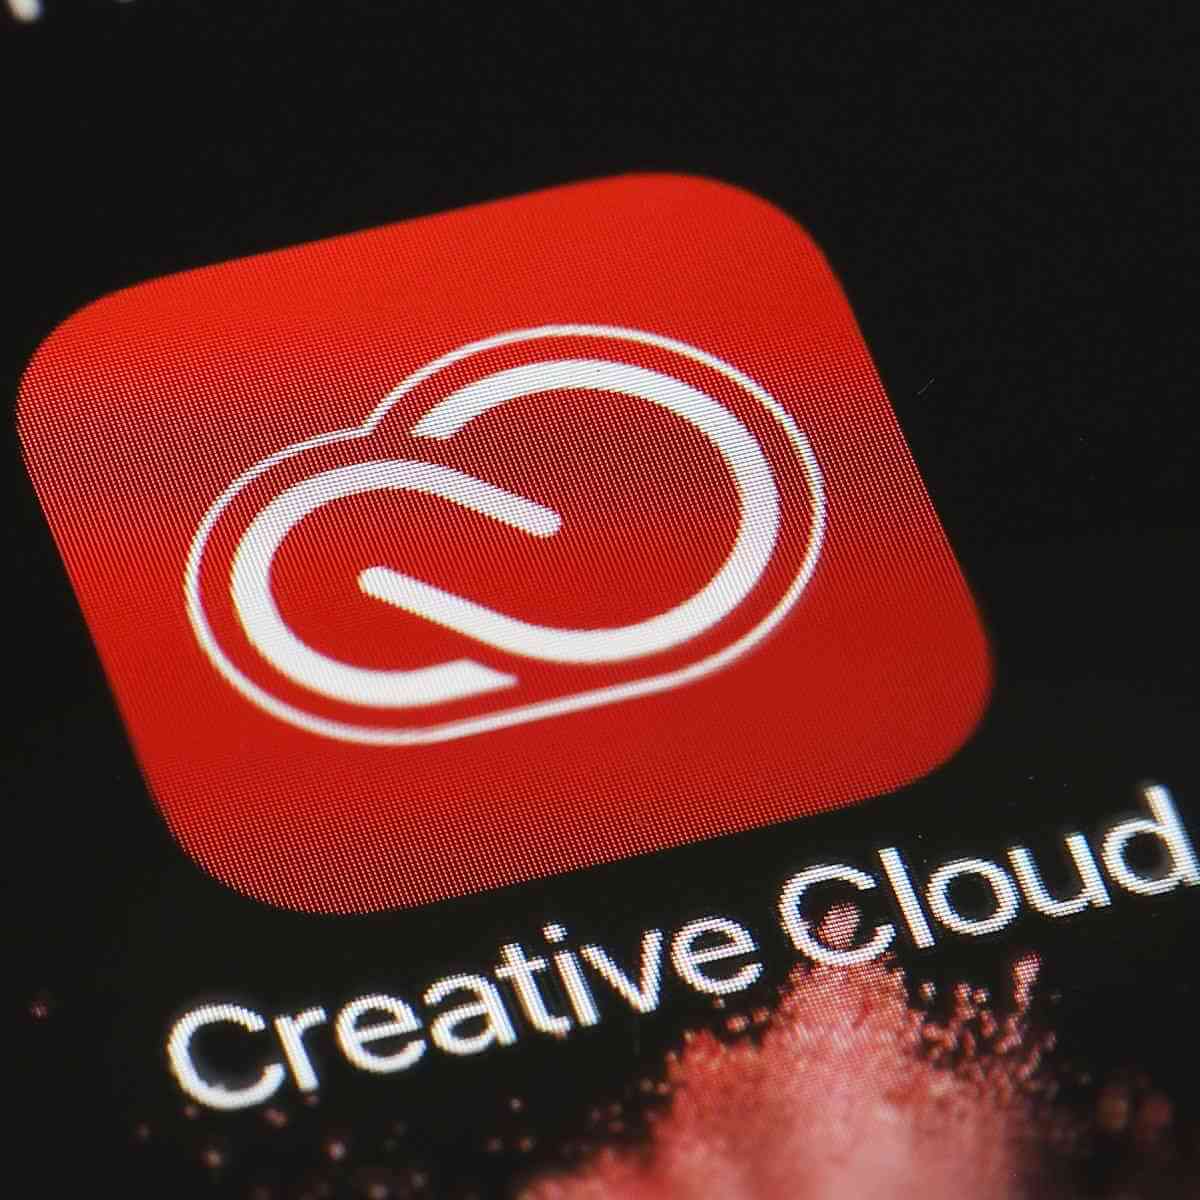 Adobe creative cloud download location